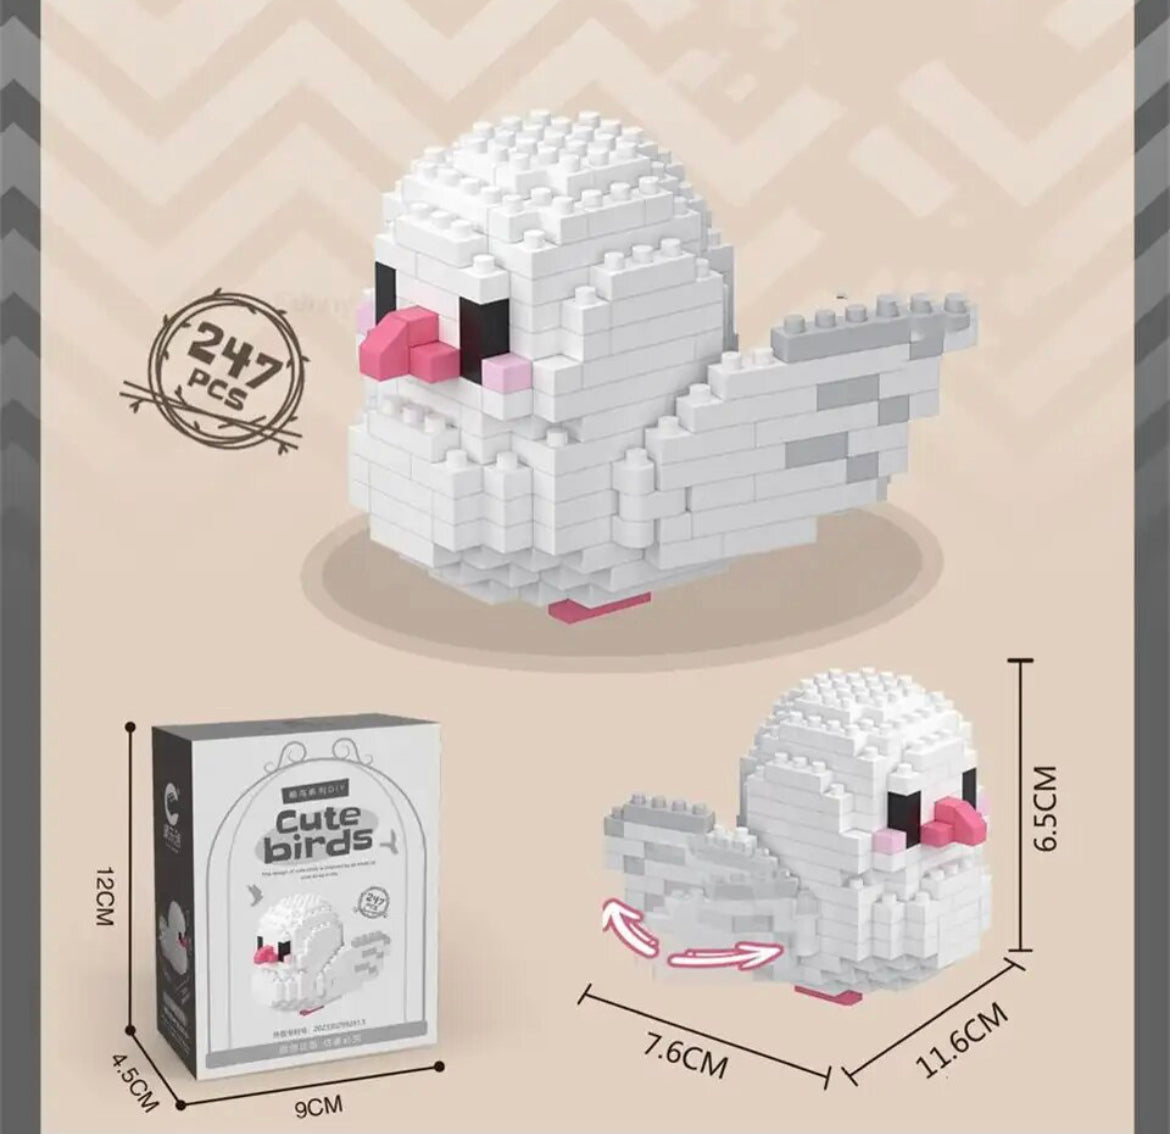 Little Birds Legos - 12 Options